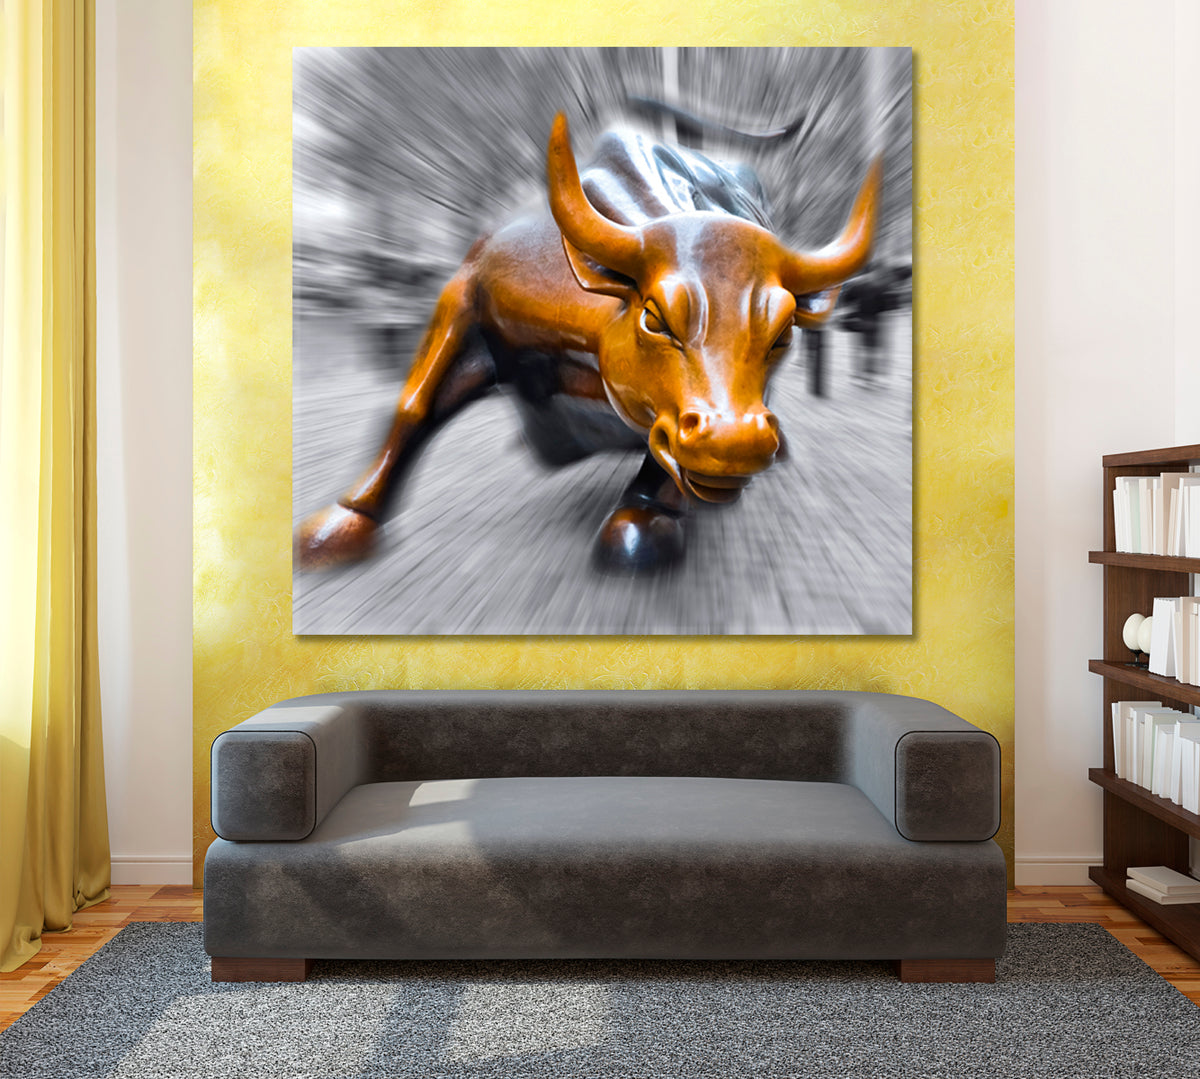 Charging Bull symbol of the New York NEW YORK CITY NY USA - Square Panel Photo Art Artesty 1 Panel 12"x12" 